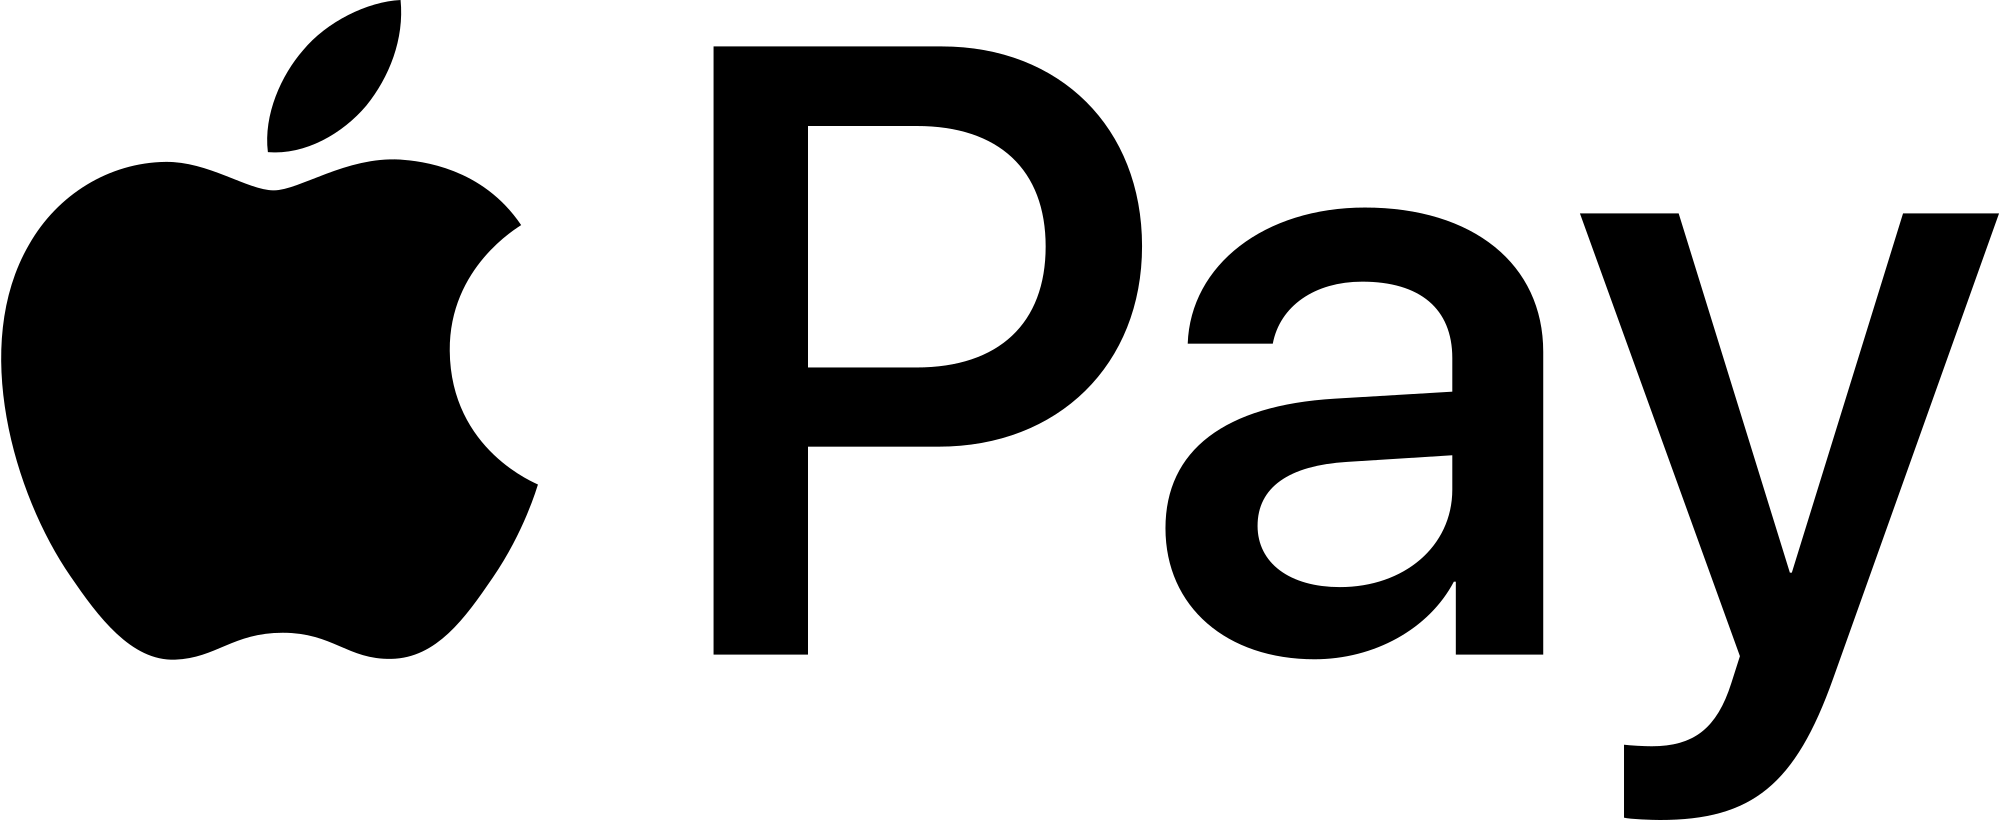 Google Pay Logo - Logodix